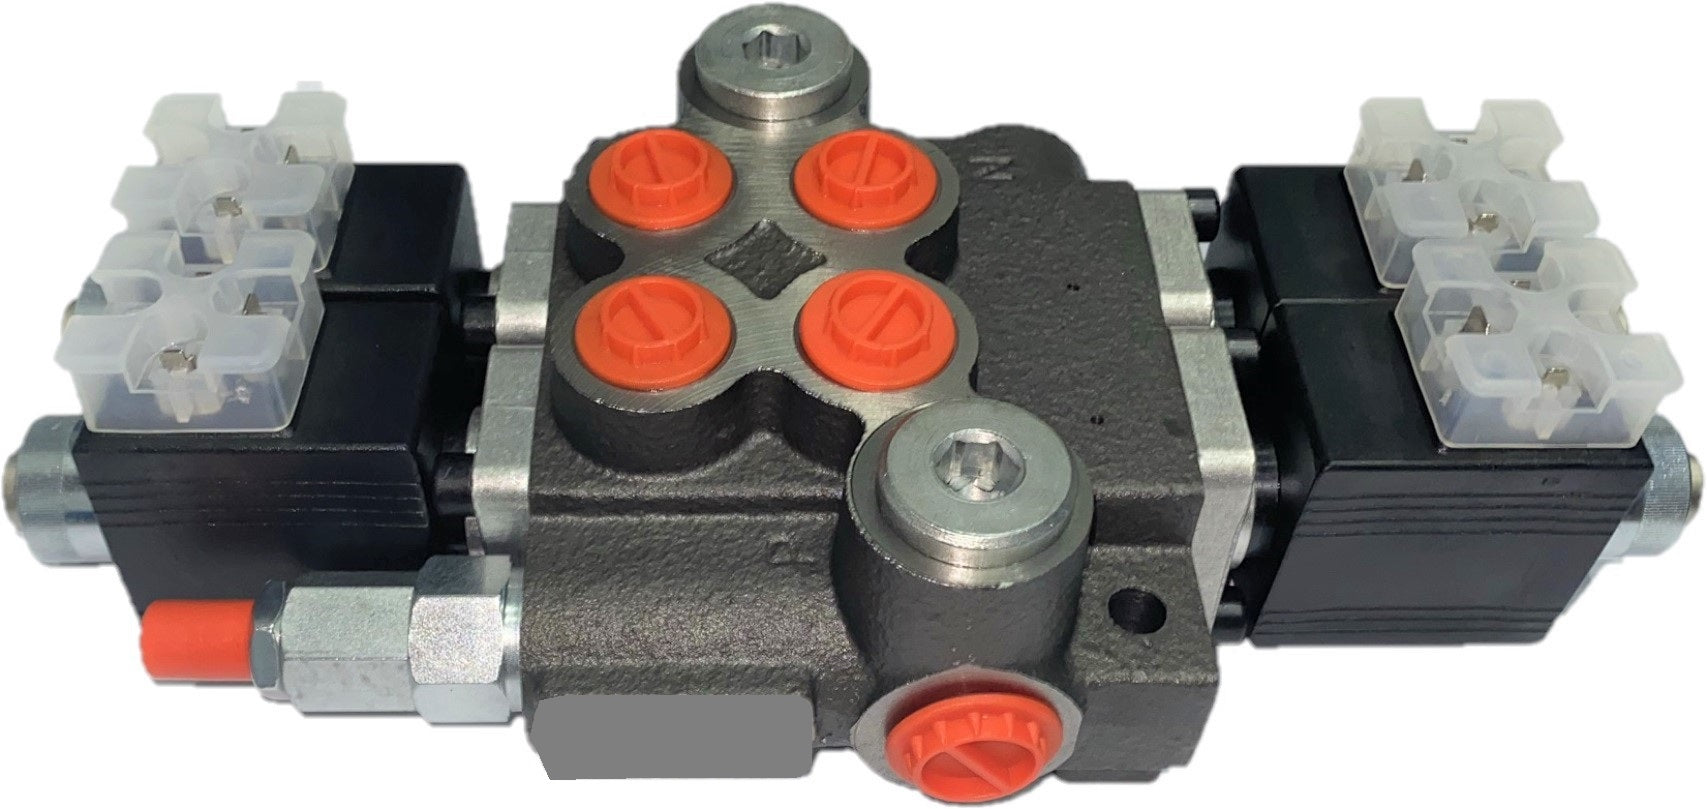 CROSS Manufacturing 131135 SBA2 Series Cast Iron Single Spool Monoblock  Hydraulic Directional Control Valve, 3-Position, 4-Way, Open Centered, 3/4